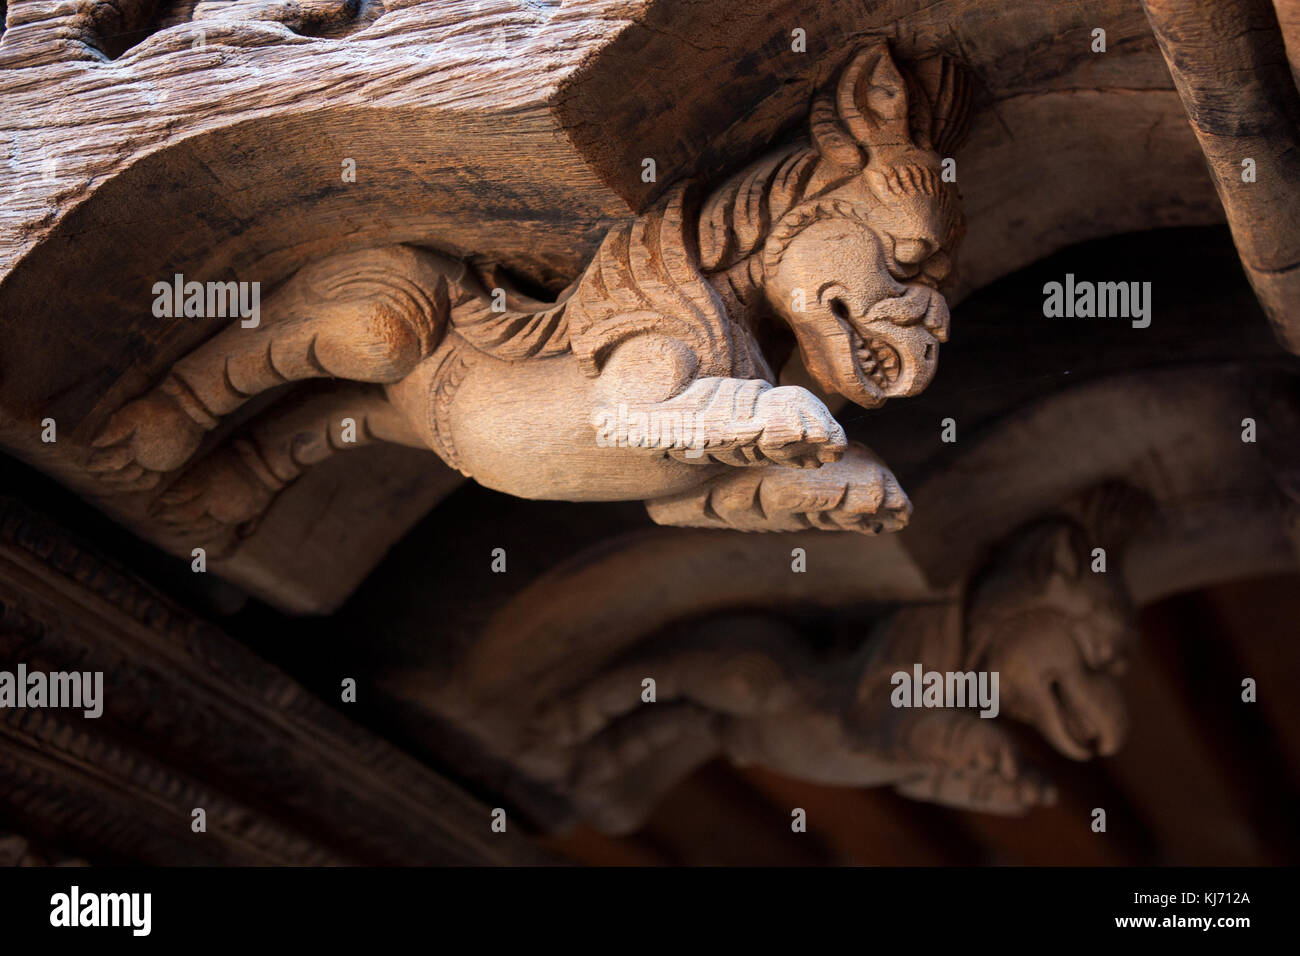 A handmade wood sculpture in a Temple in Patan Durbar Square, Kathmandu. Nepal. Stock Photo